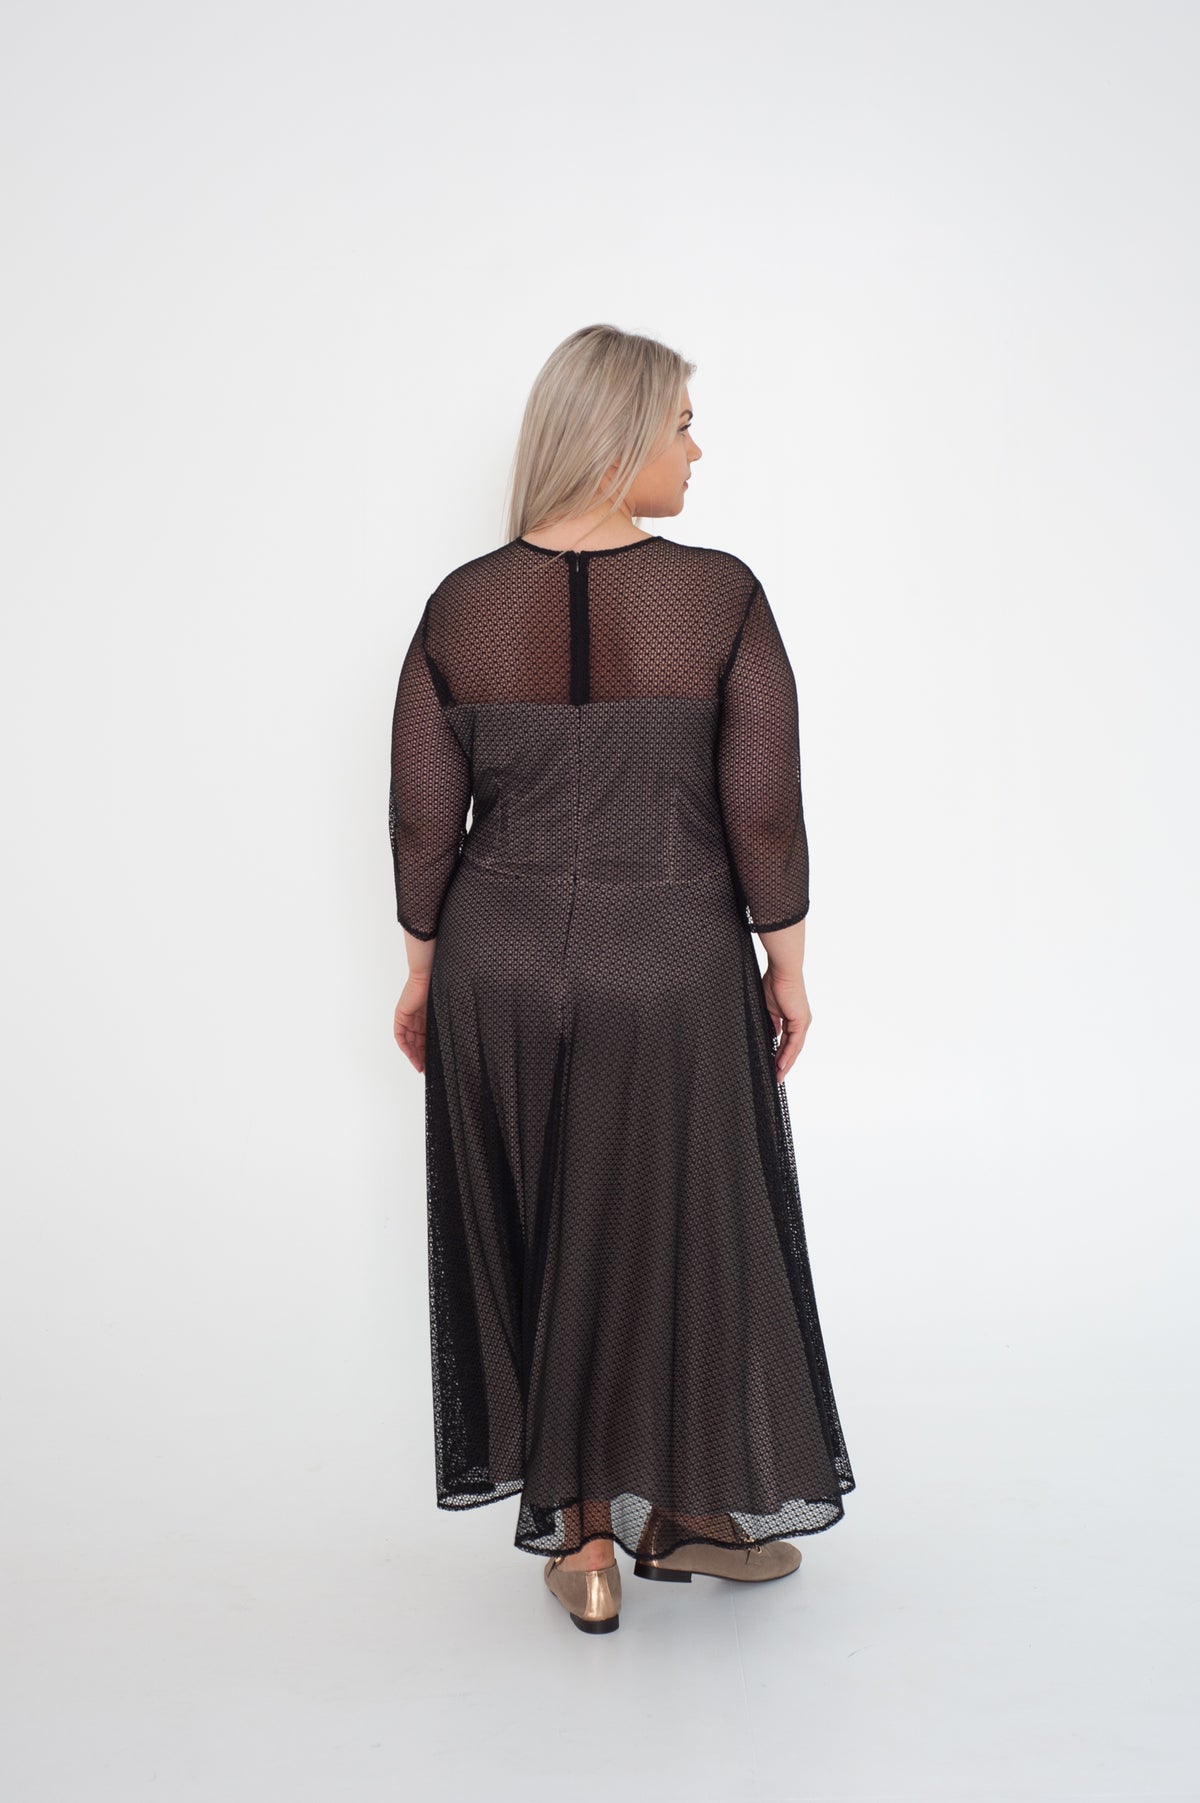 Black midi lace dress with beige lining